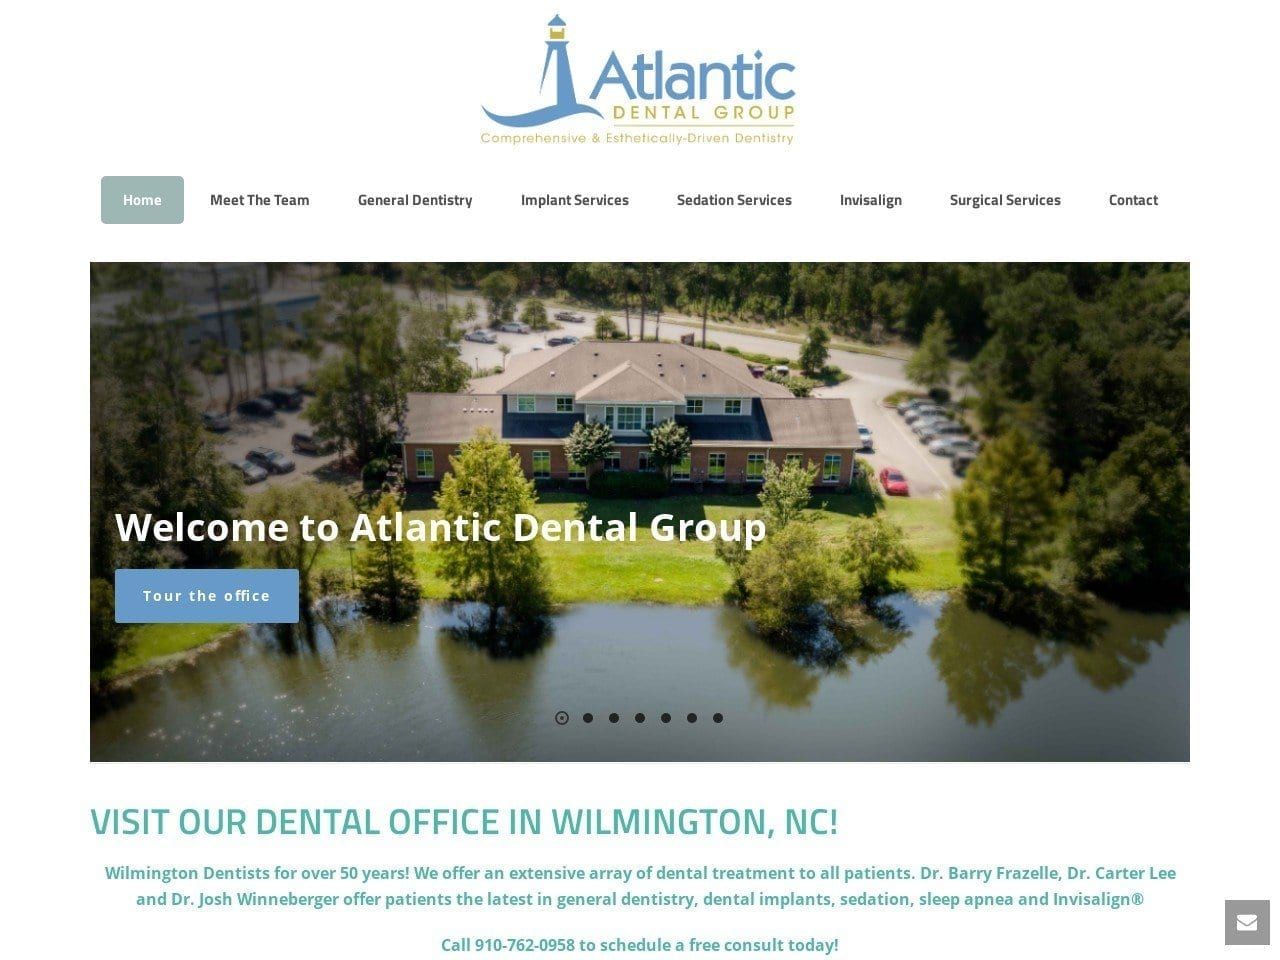 Atlantic Dental Group Website Screenshot from atlantic-dental.com